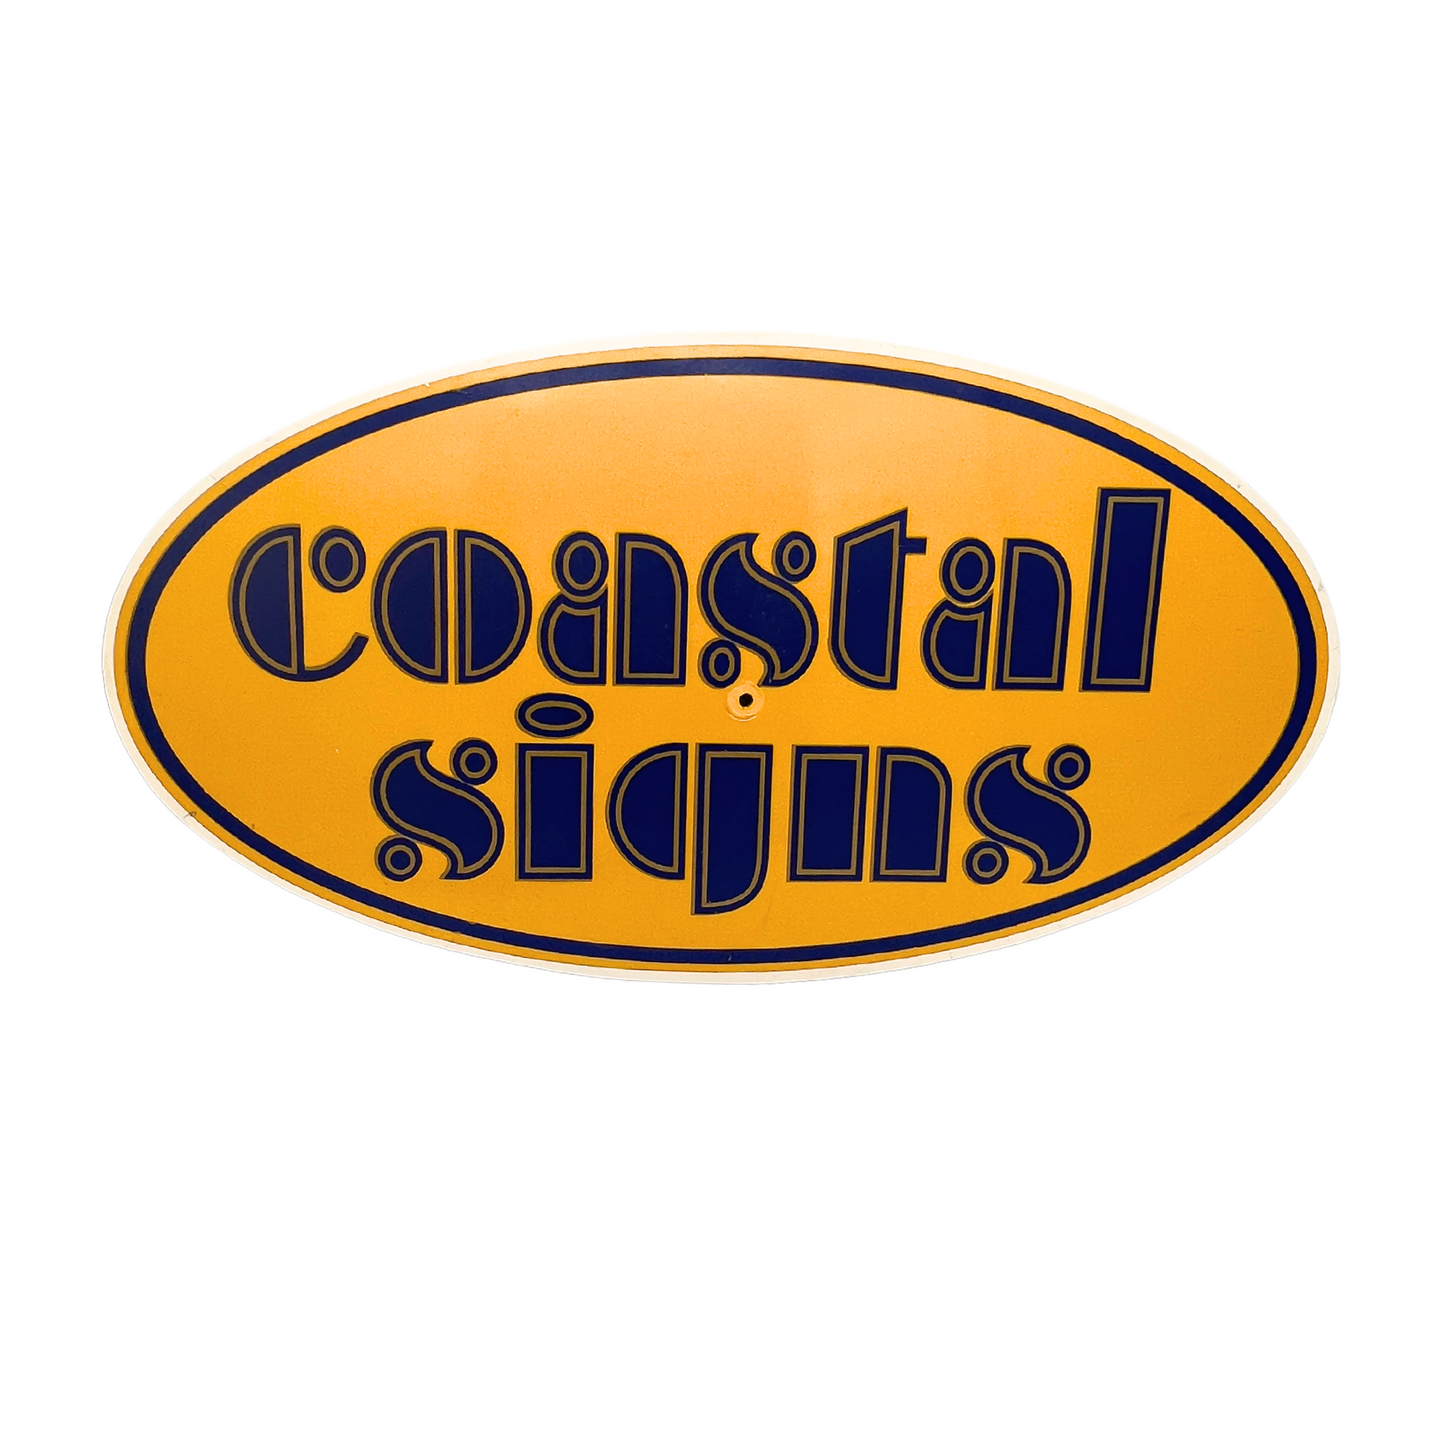 Coastal Signs advertising sign